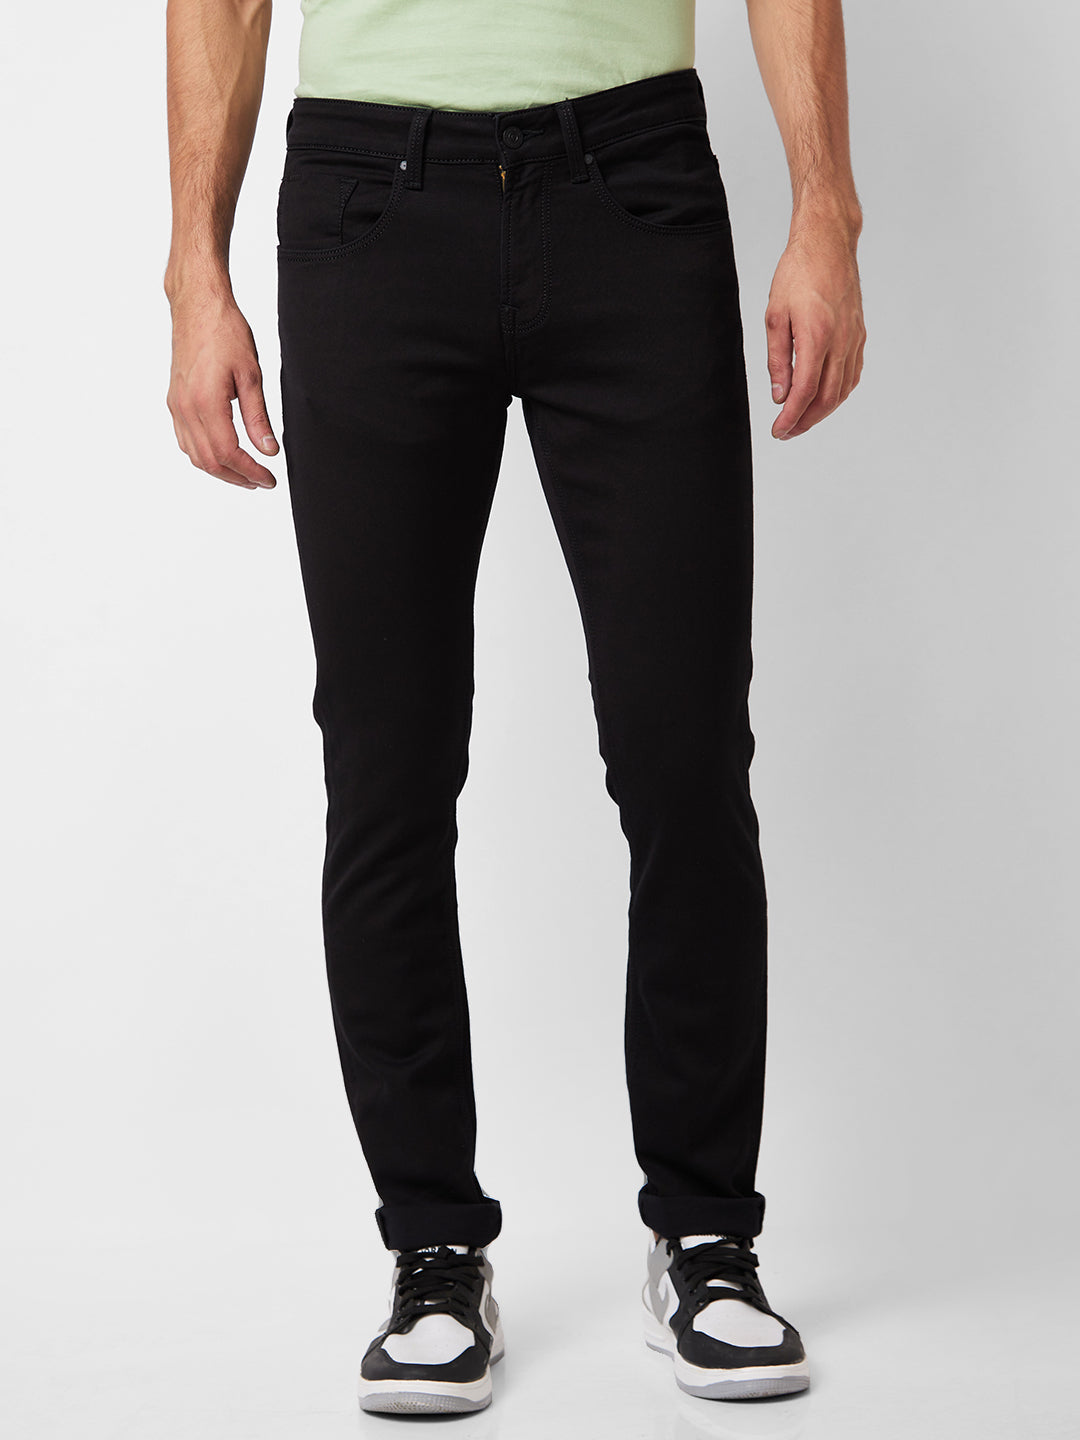 Spykar Low Rise Skinny Fit Black Jeans For Men